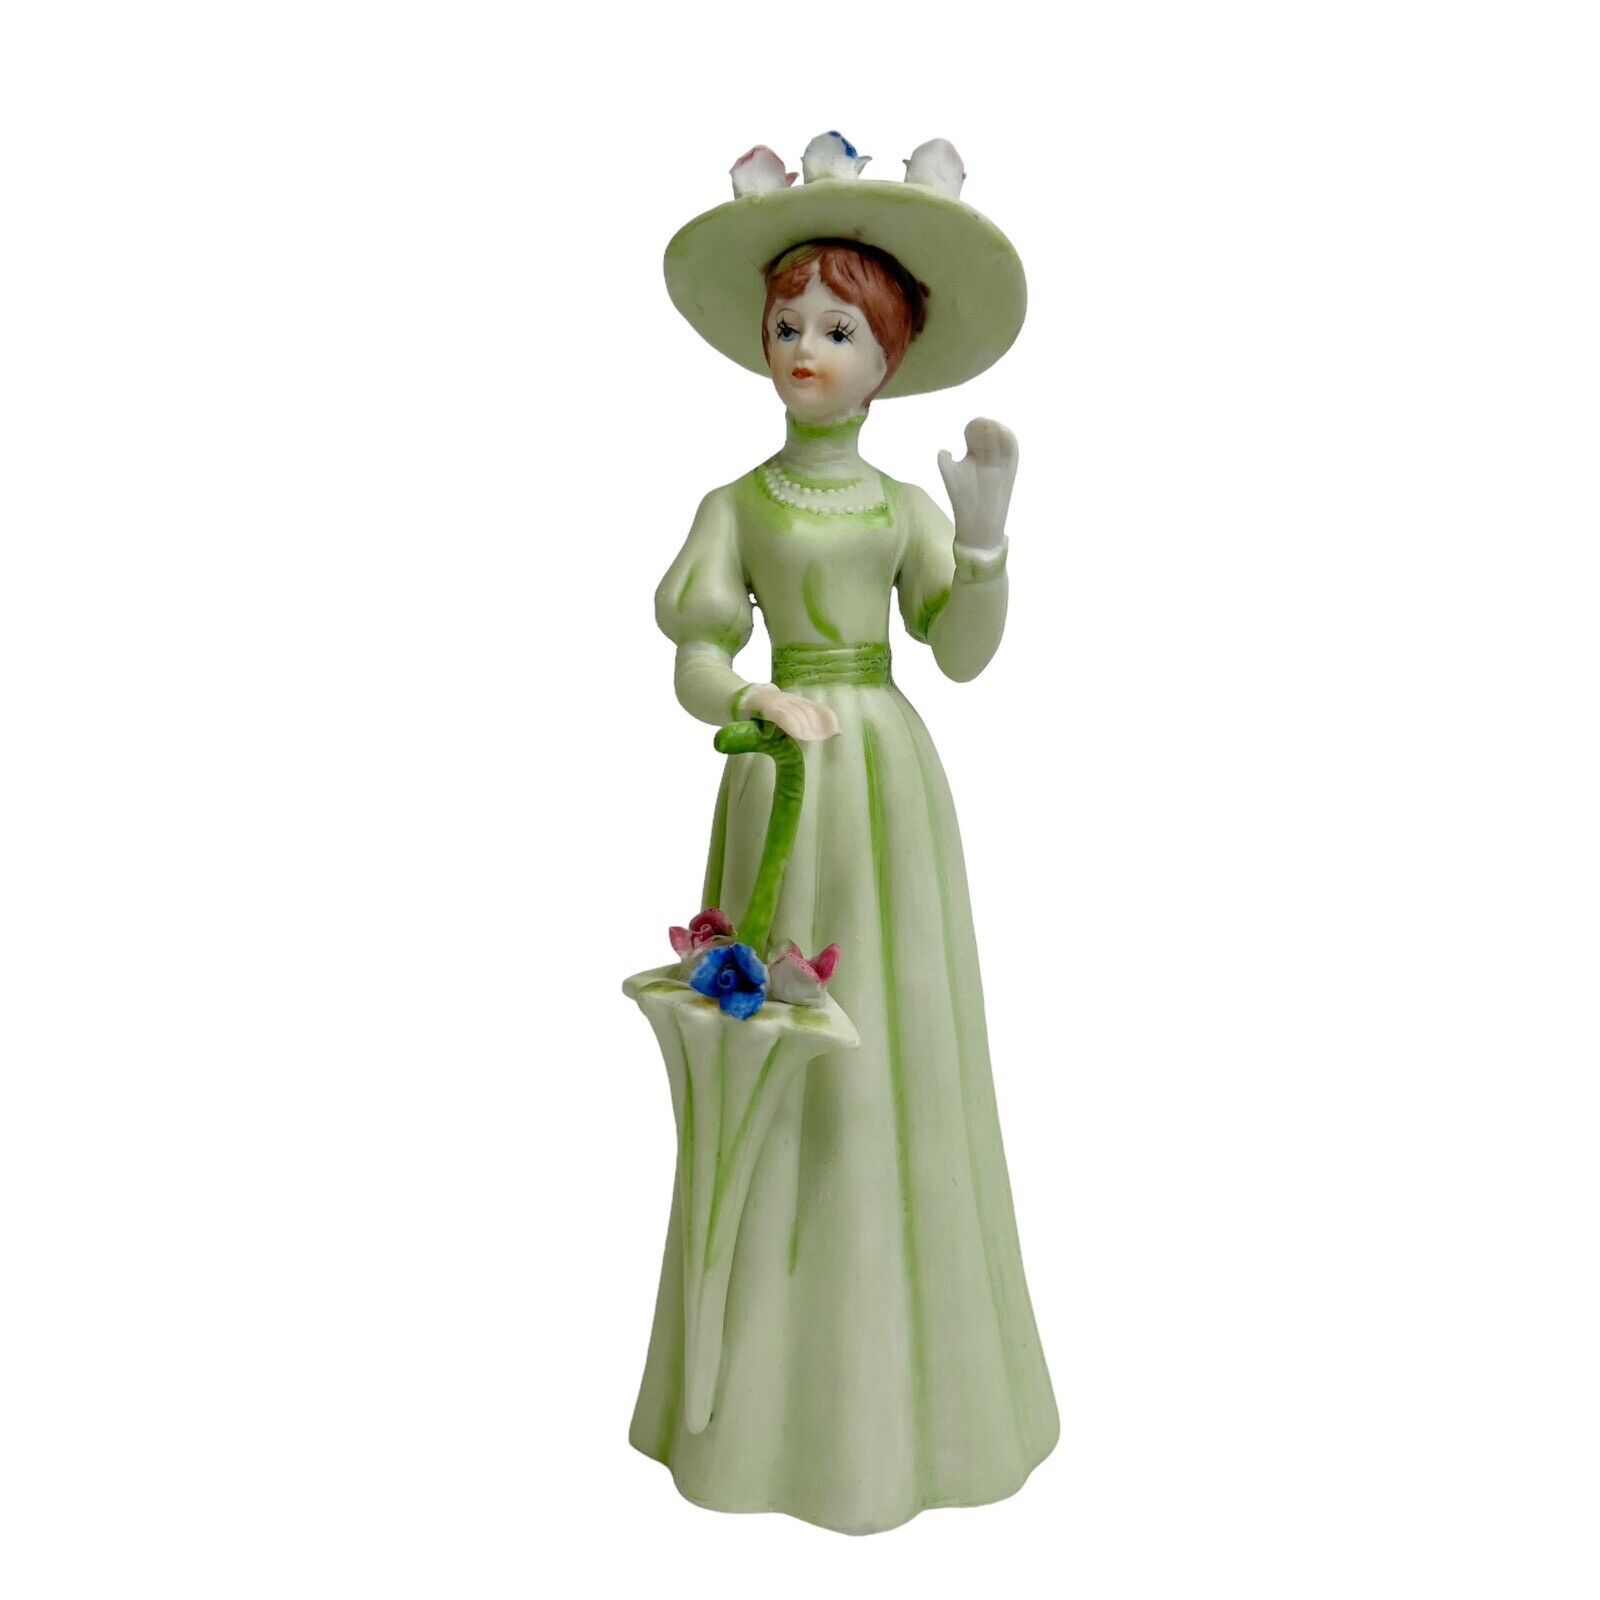 Vintage Porcelain Victorian Lady Figurine Green Dress Umbrella Flowers Taiwan 9”